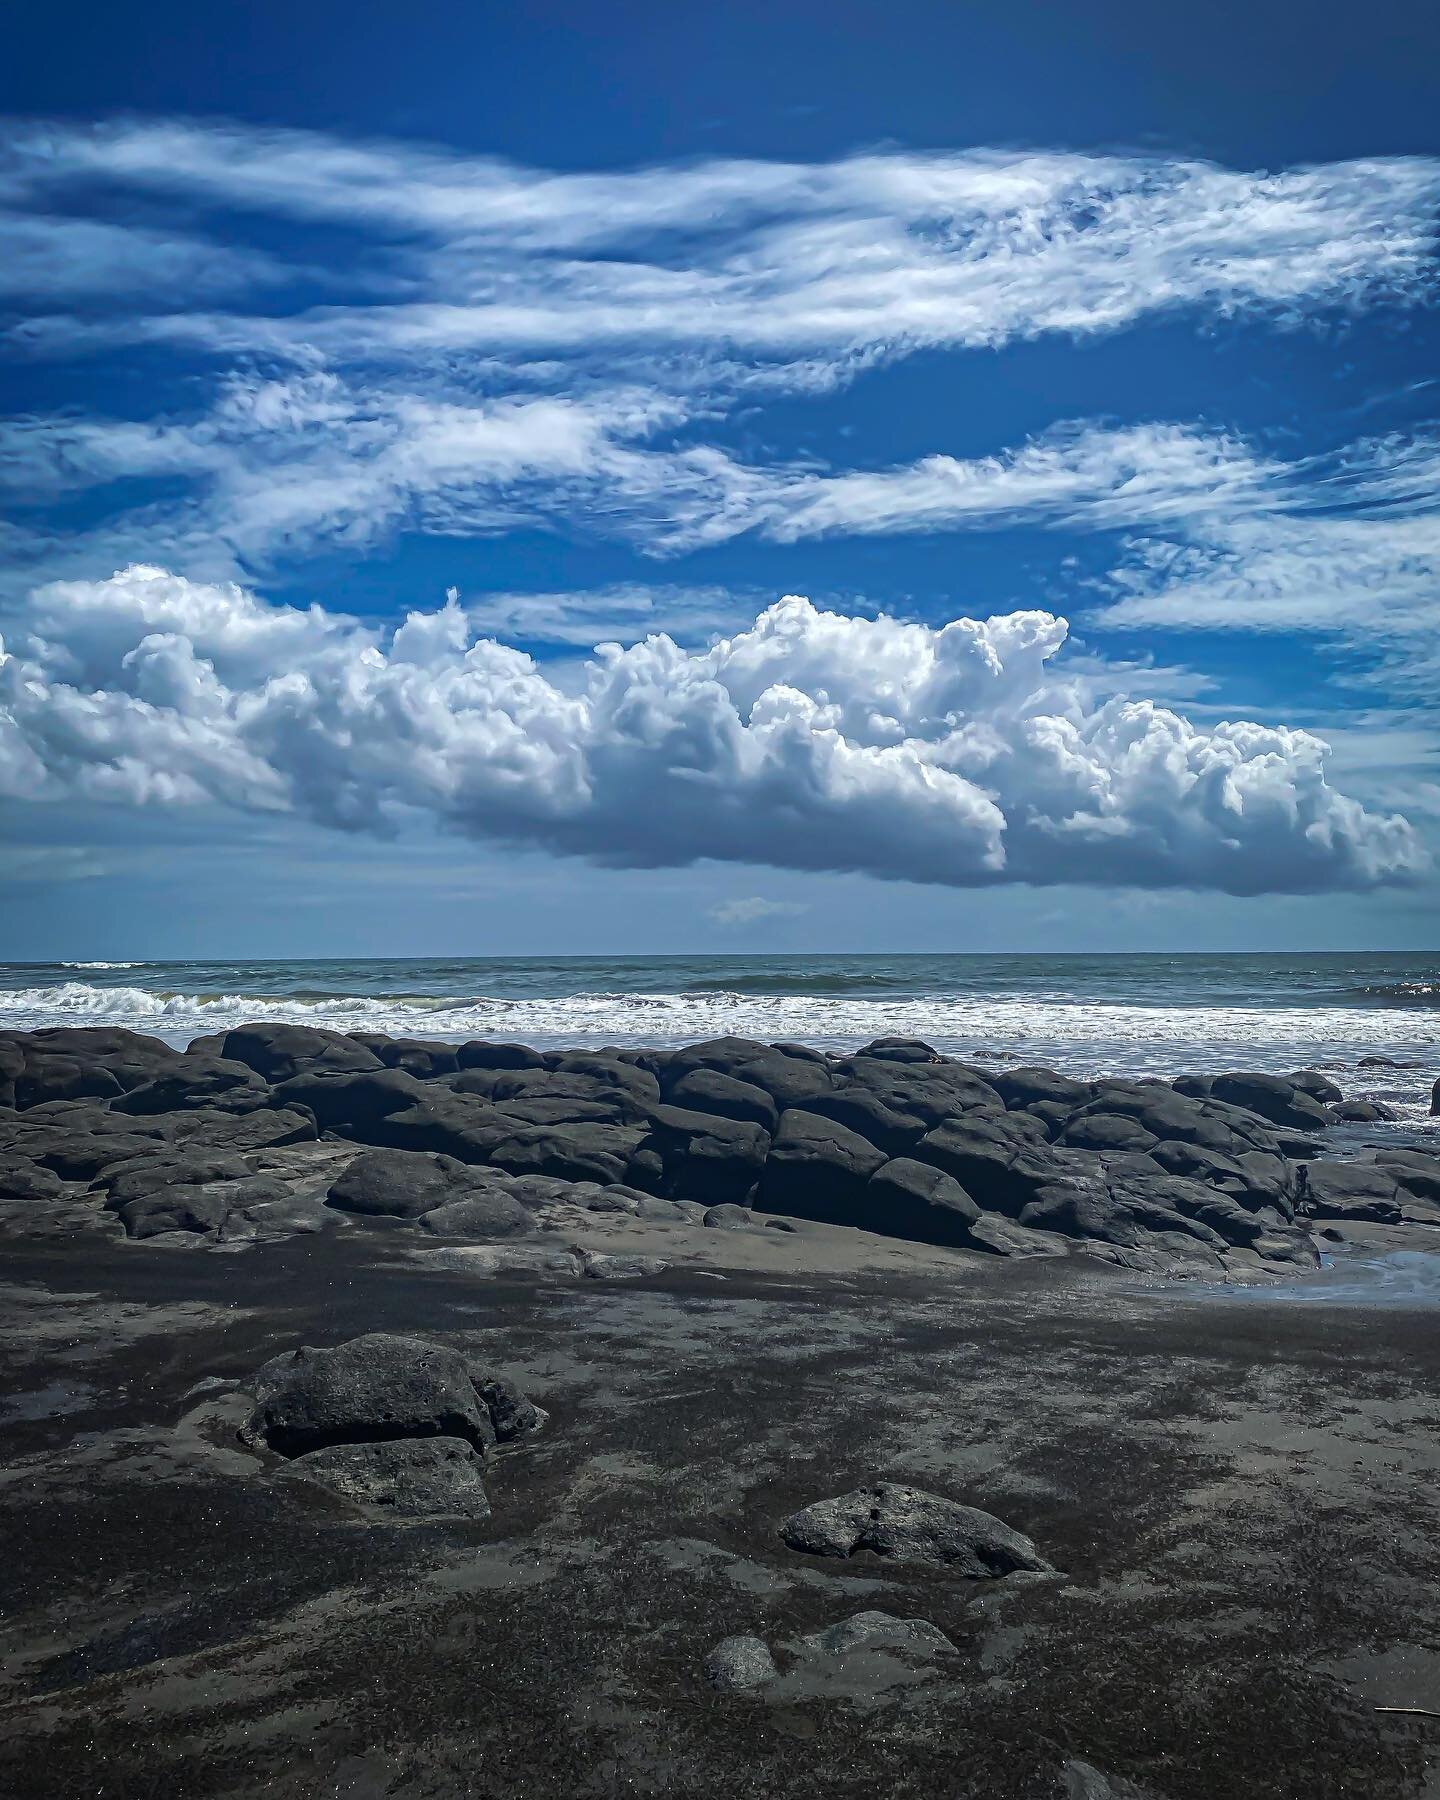 #bali #beach #clouds #indonesia #33trekking #livelaughlove #travel #adventure #backpacking #explore #photography #travelphotography #blog #nomadic #liveauthentic #worldtravel #artofvisuals #scenic #natgeo  #danajonchappelle #shotoniphone #balianbeach